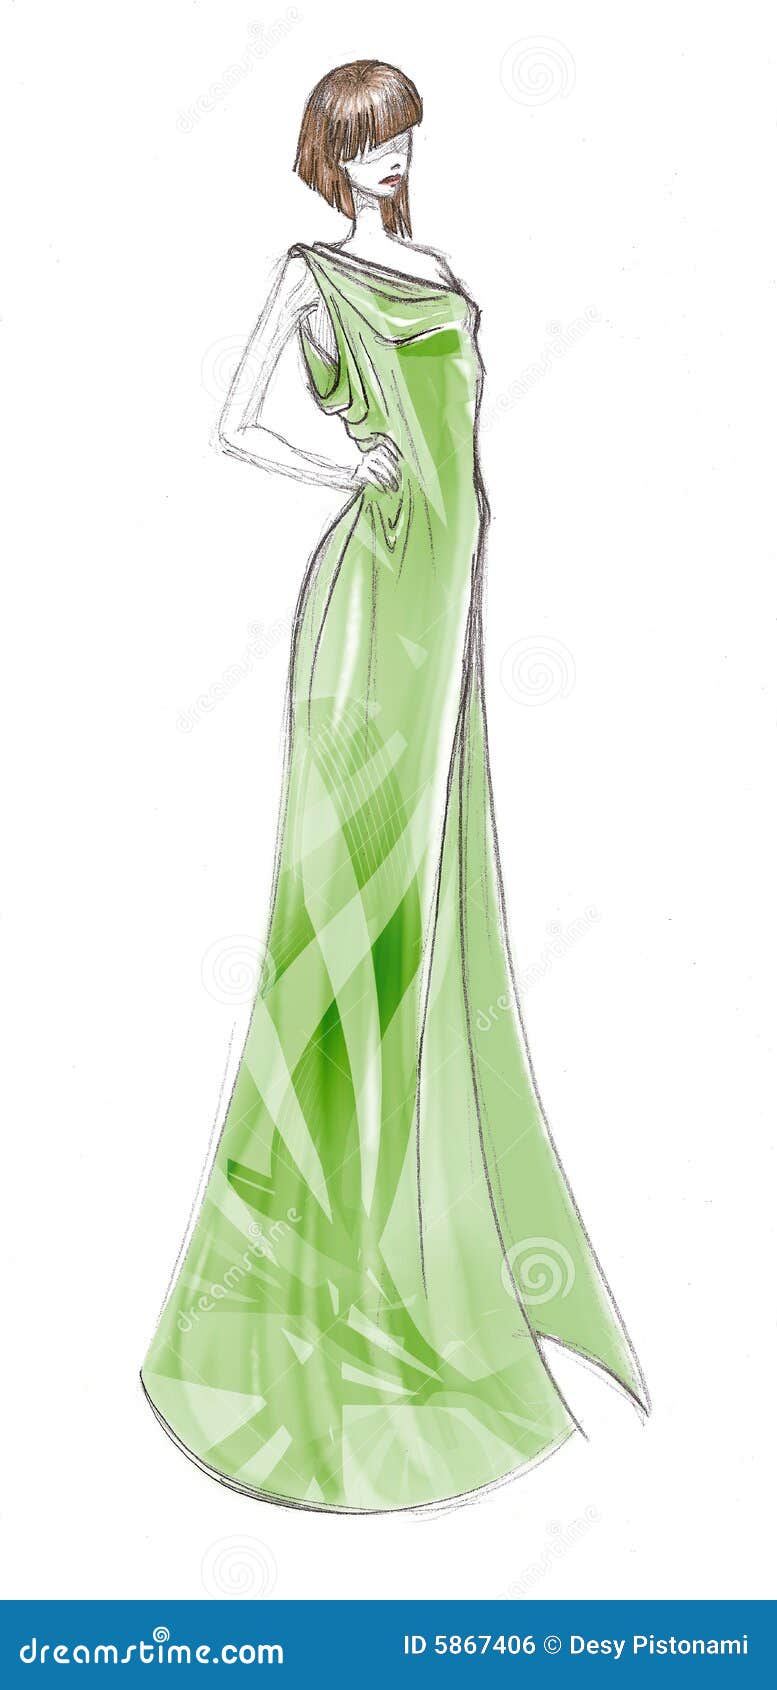 Fashion dress stock illustration. Illustration of grey - 5867406